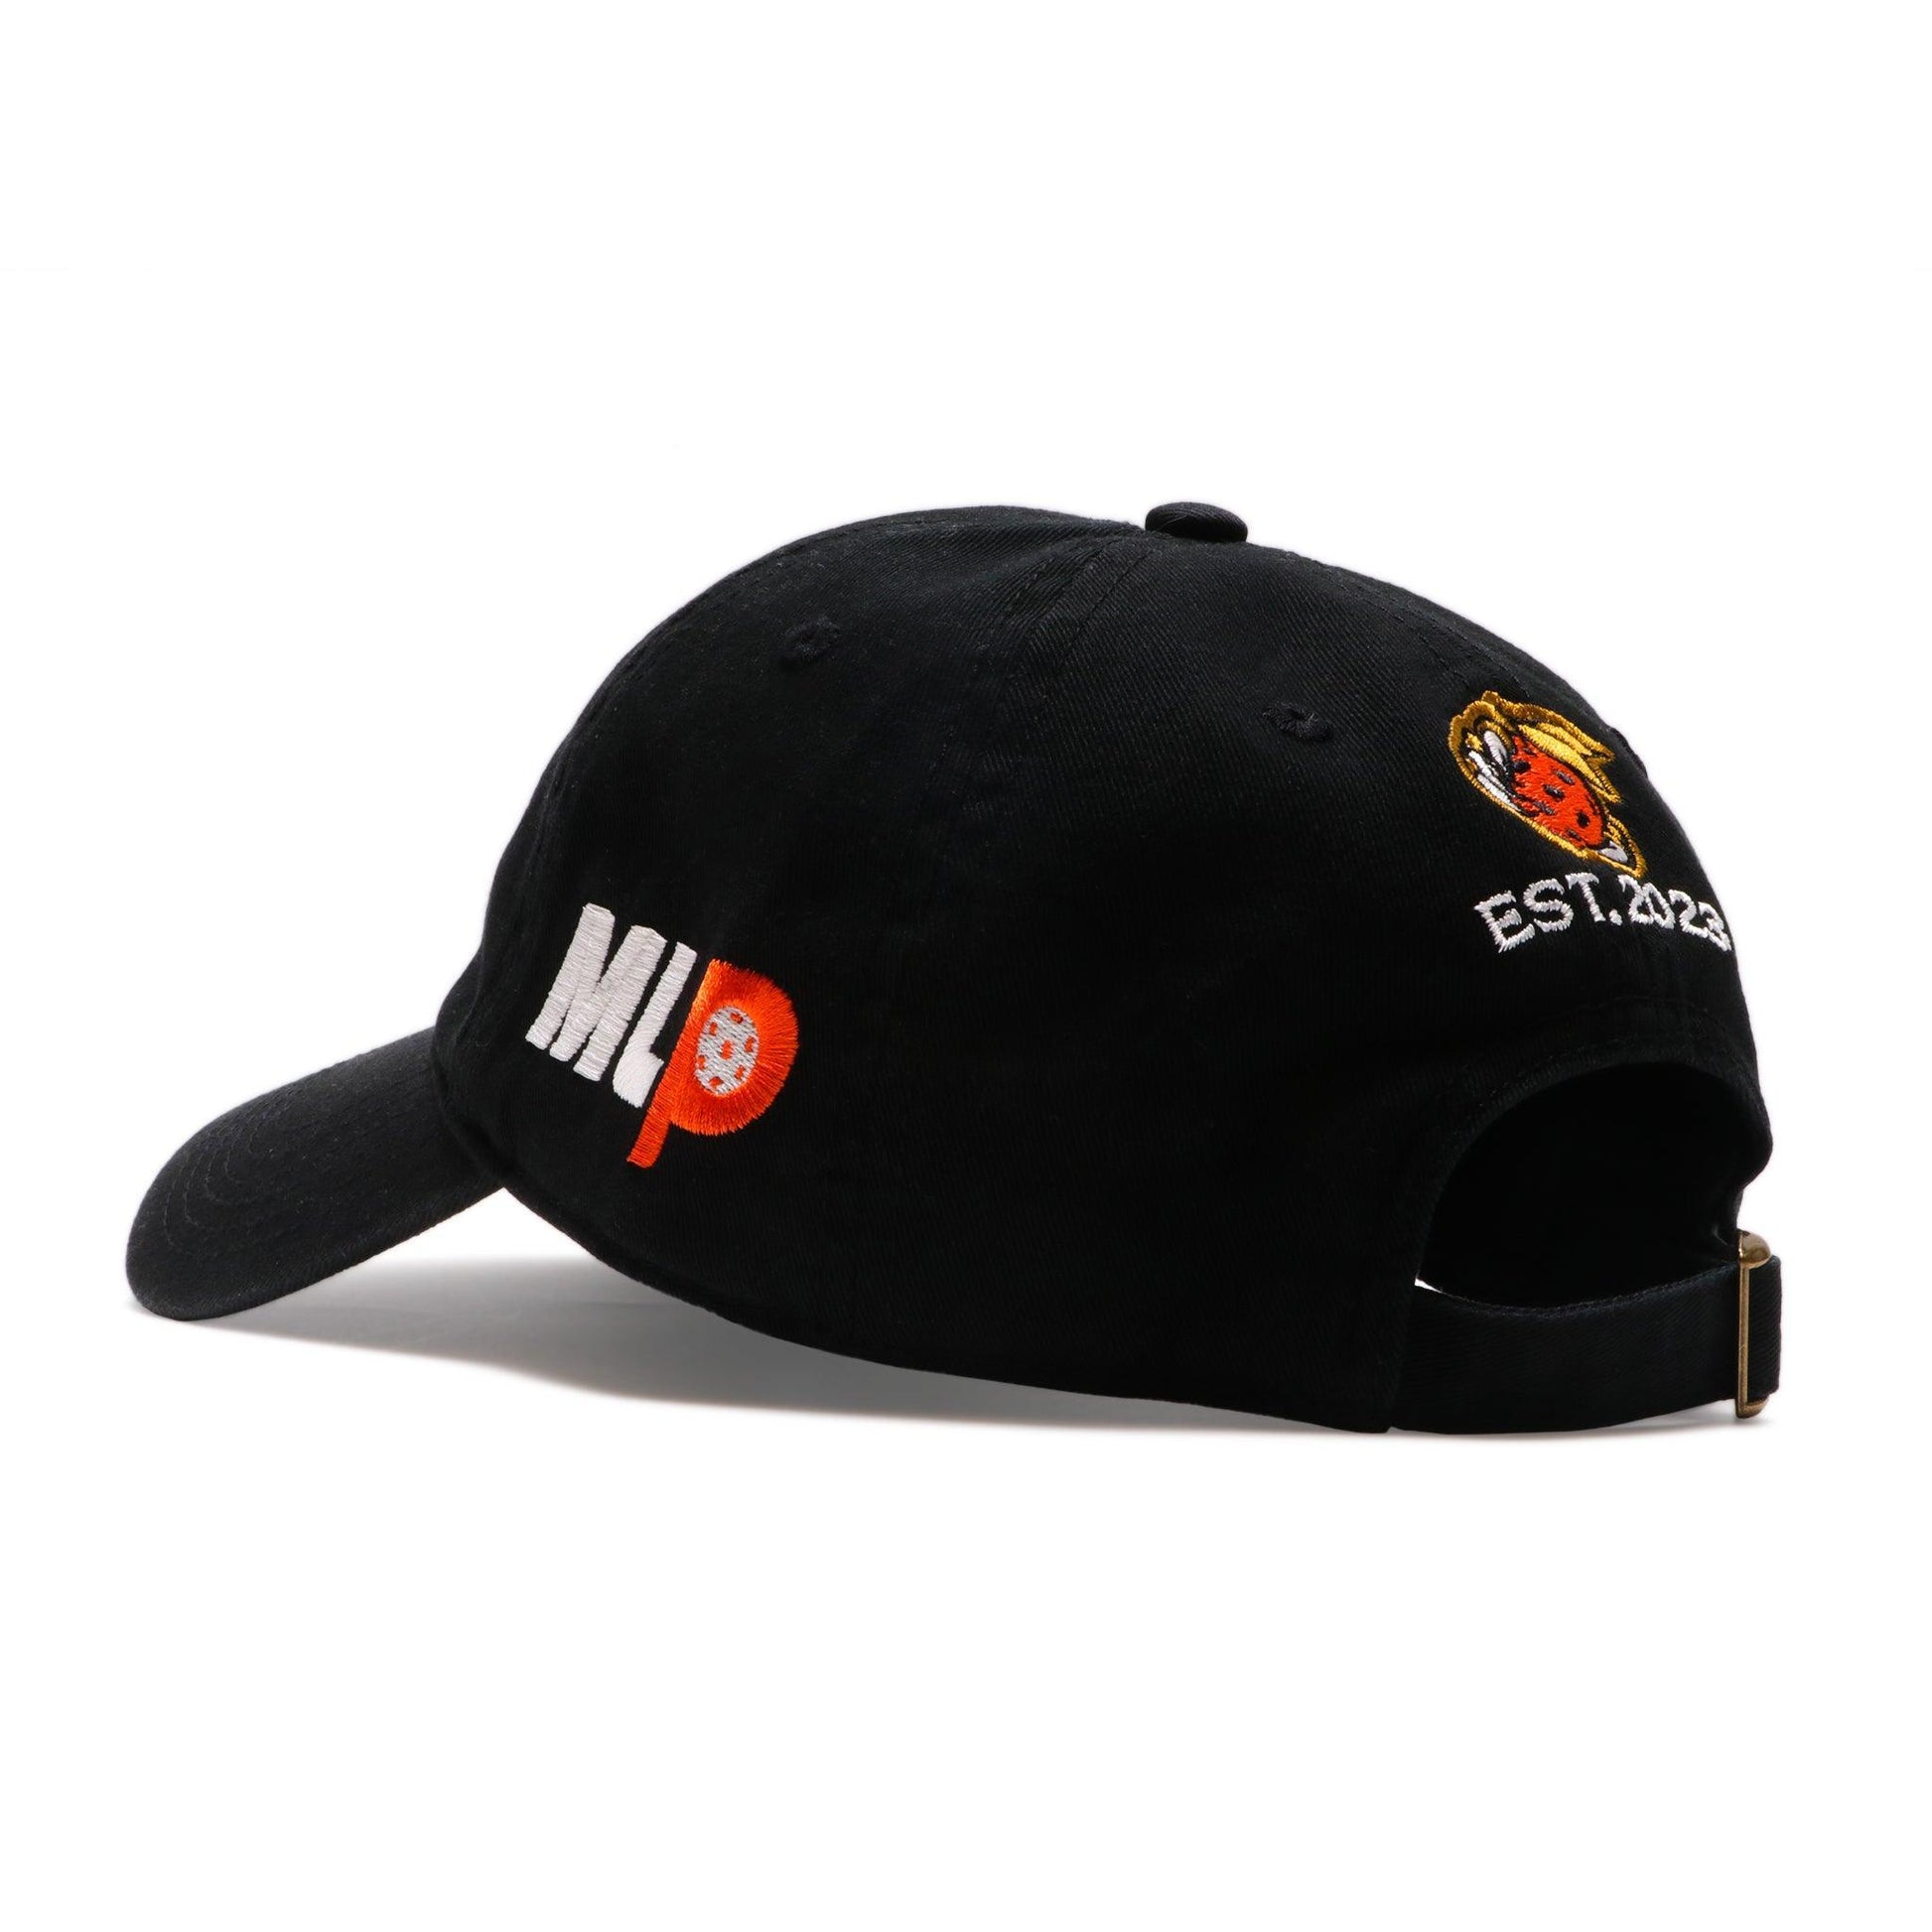 back of hat with est 2023 logo